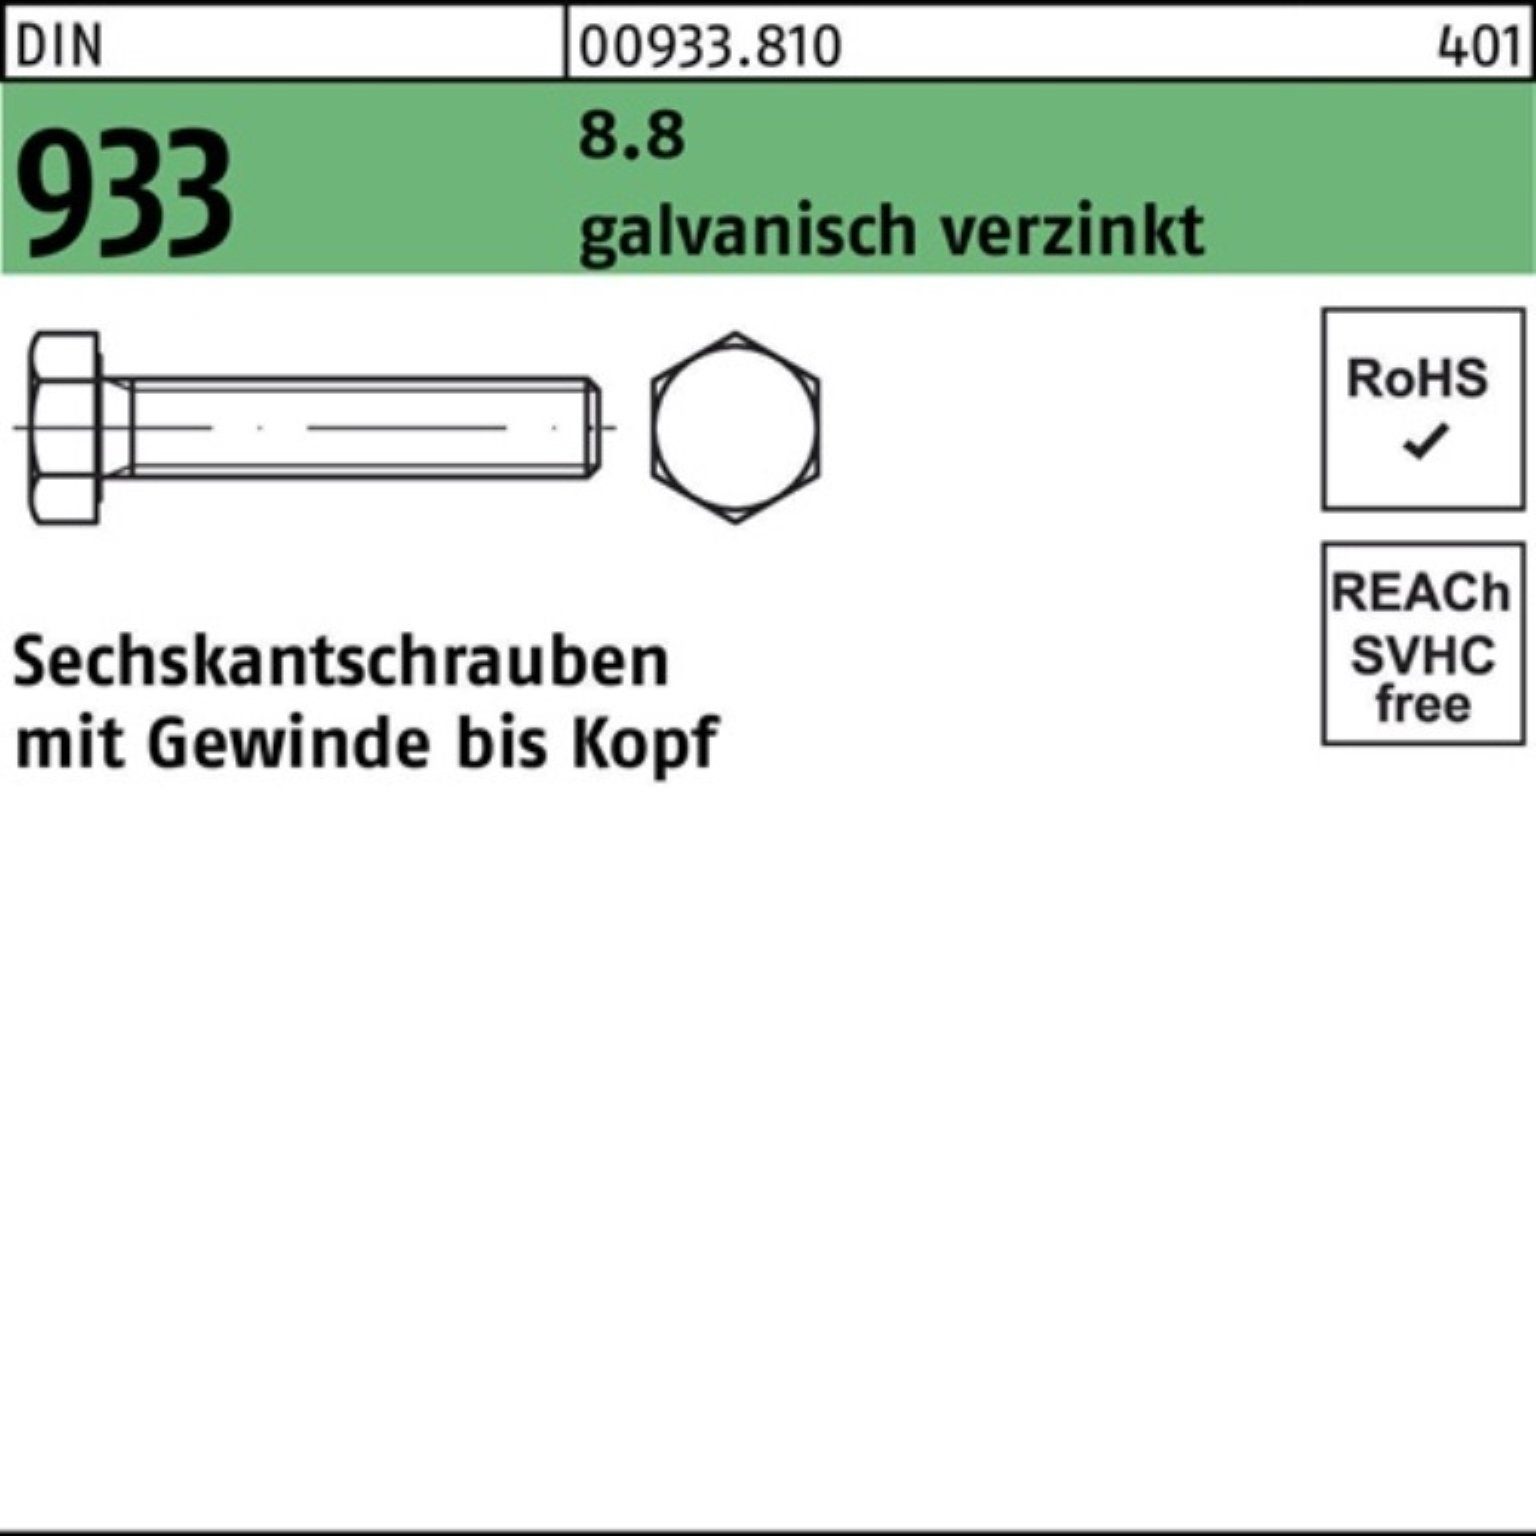 Reyher Sechskantschraube 140 DIN 100er 1 Stü Sechskantschraube M36x 8.8 galv.verz. Pack VG 933